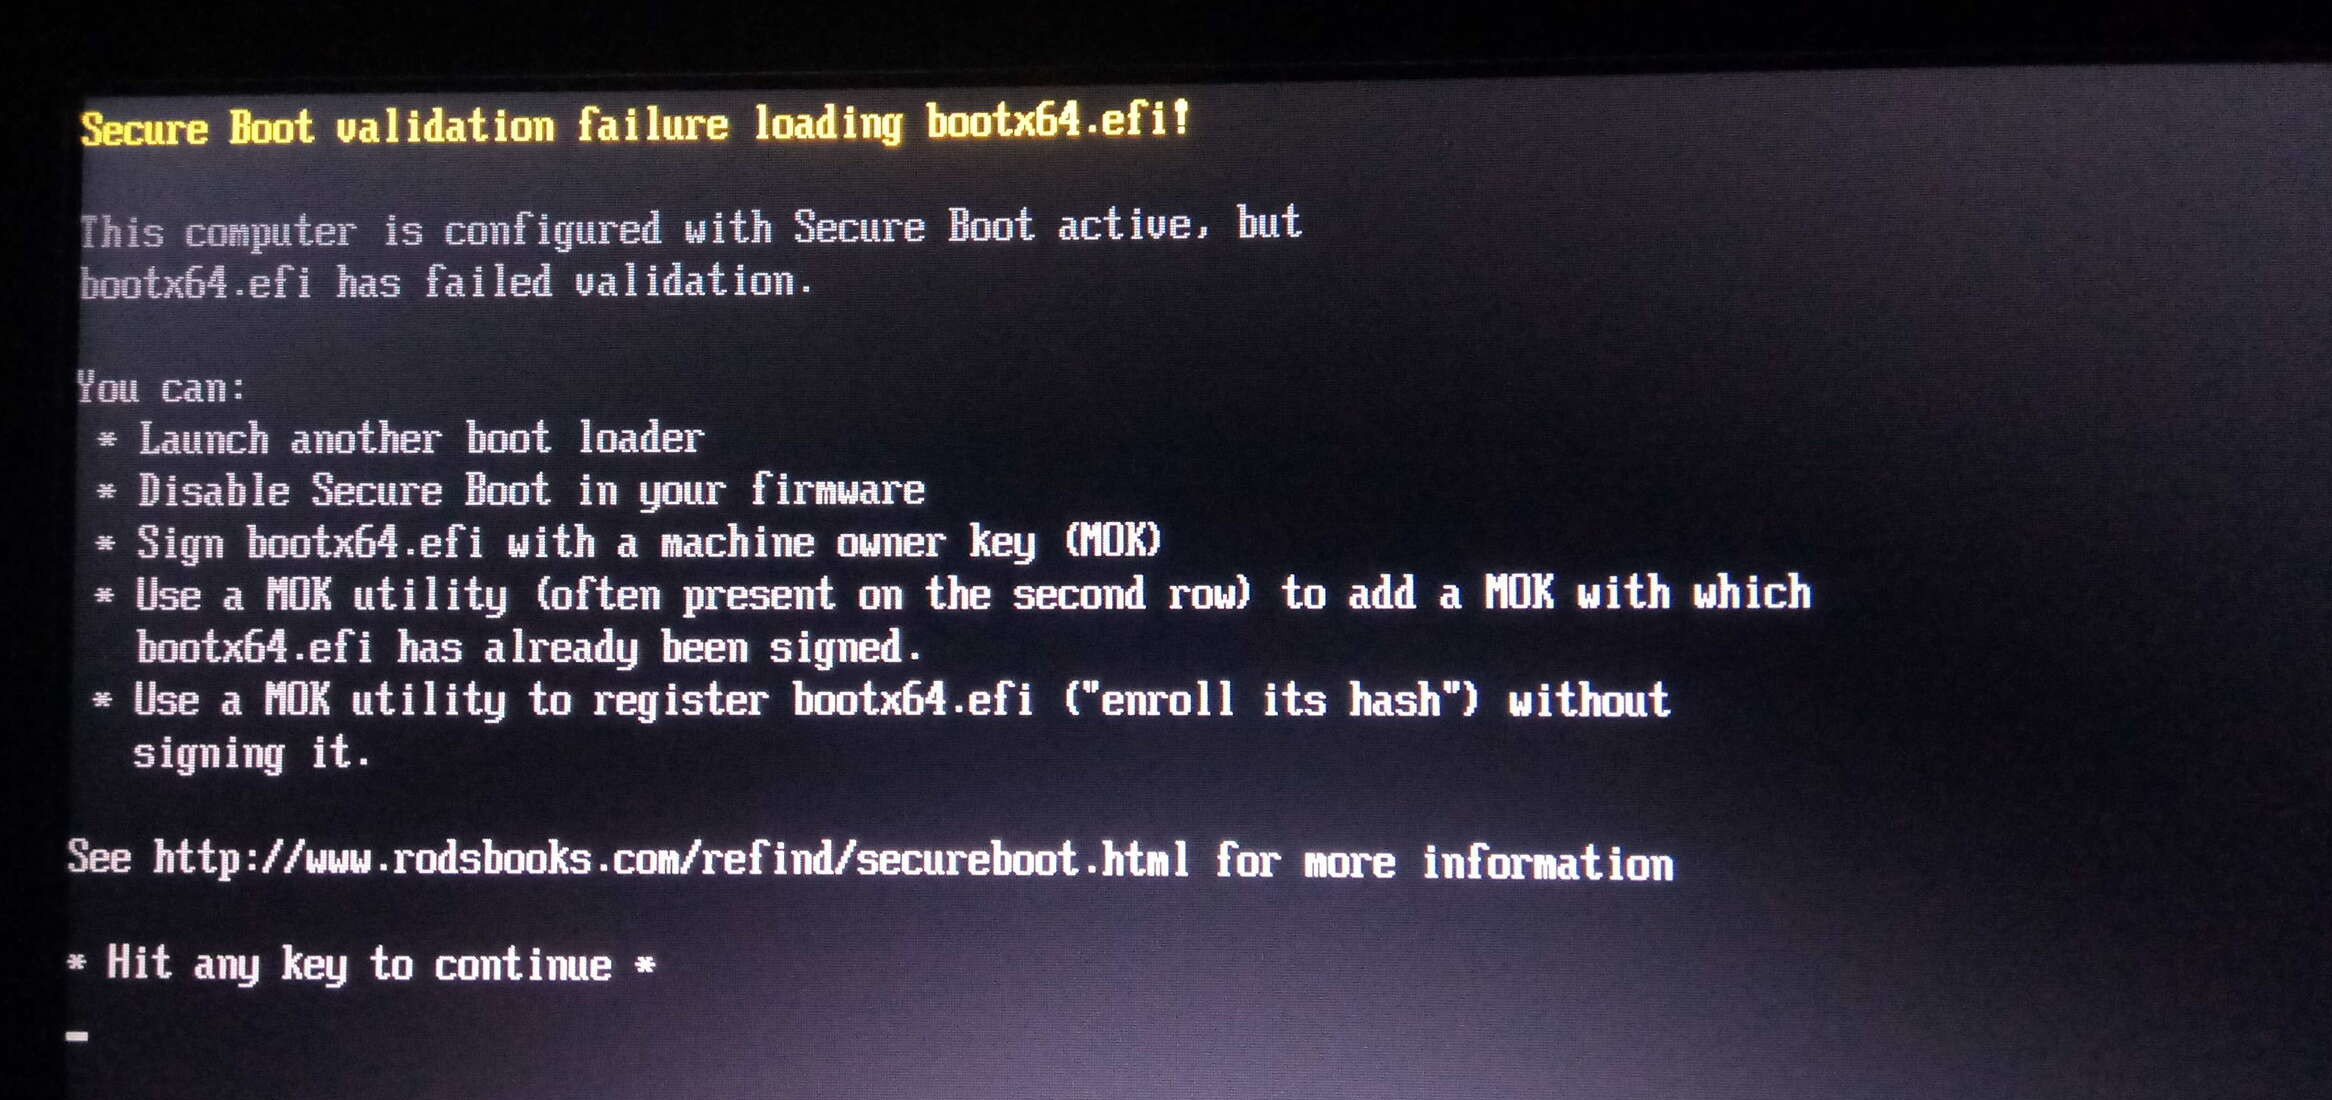 debian-linux-secure-boot-validation-failure-live-ubuntu